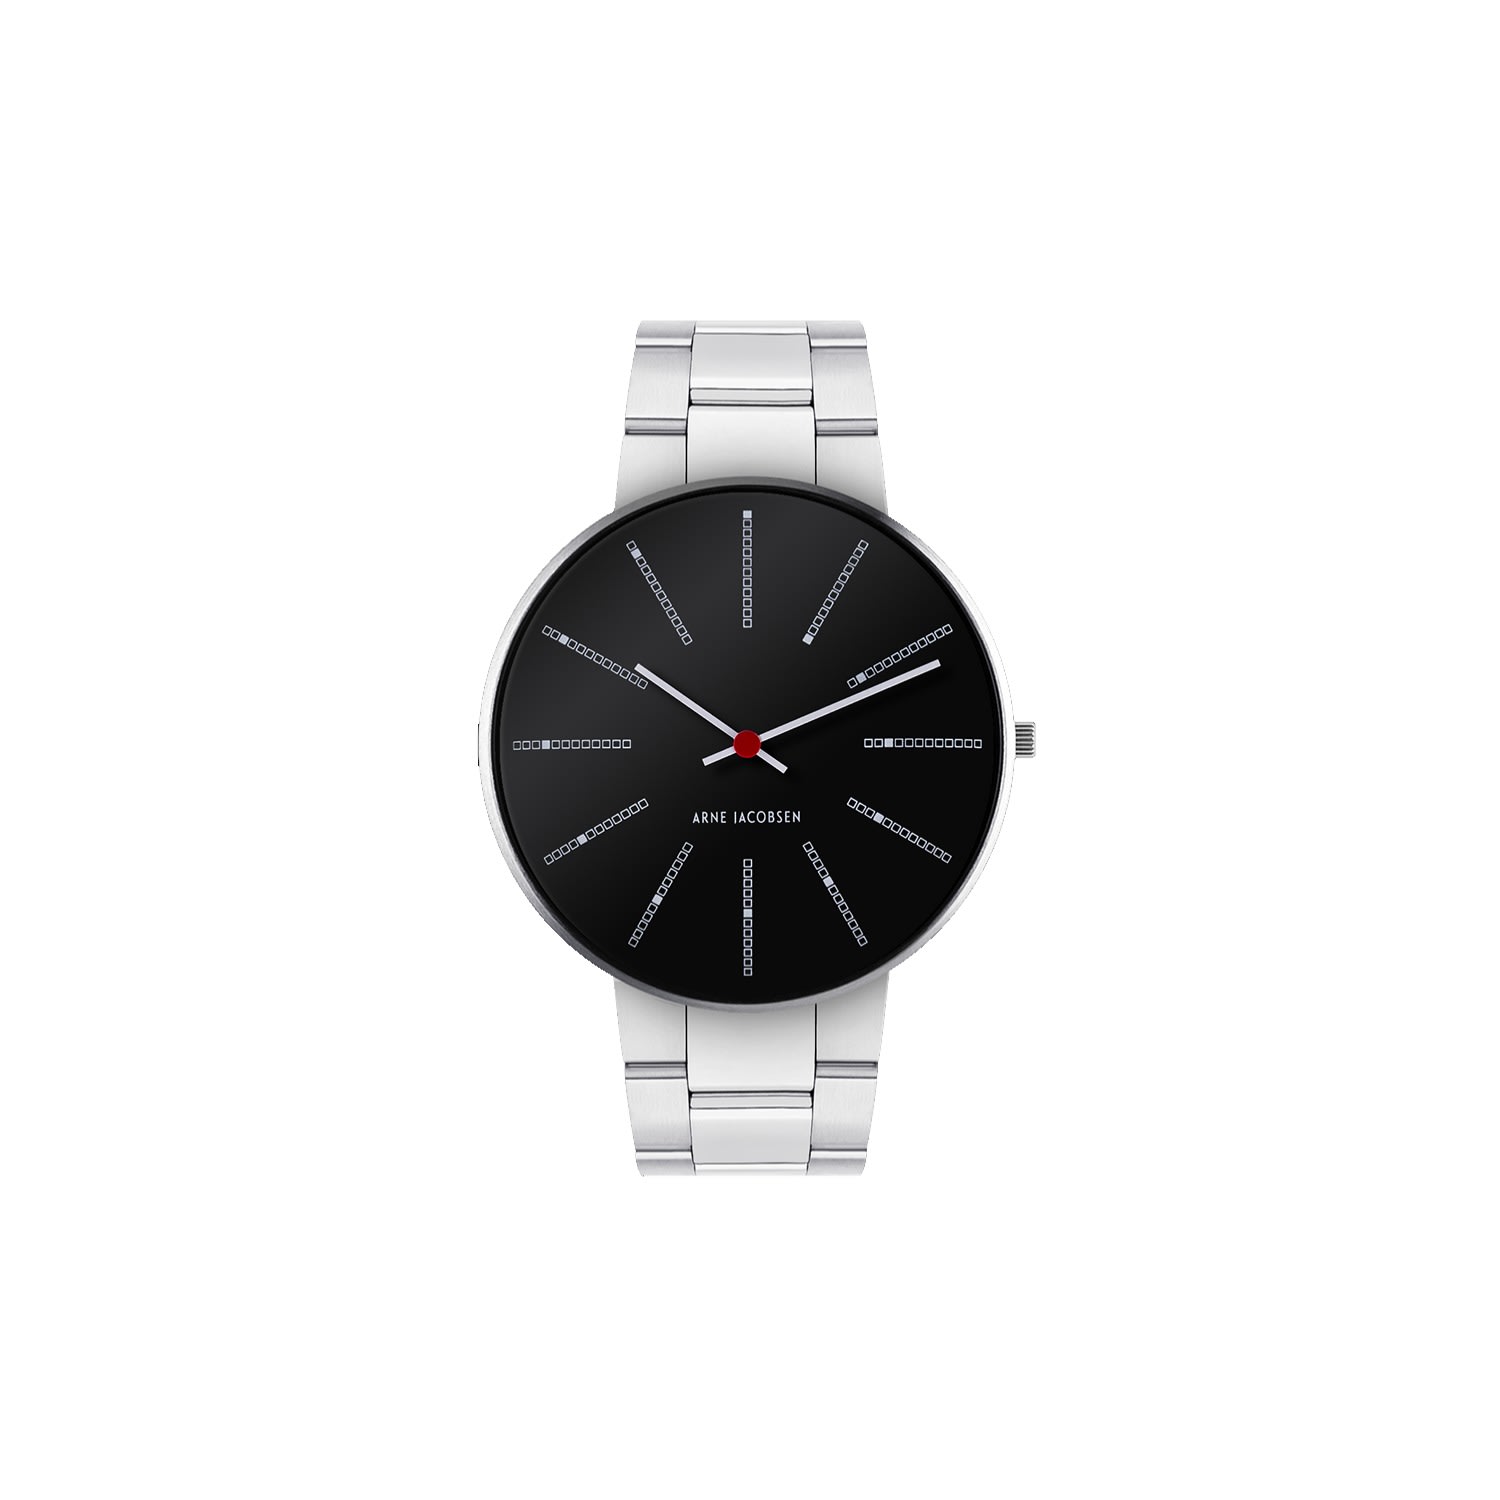 Men's Arne Jacobsen Bankers Wrist Watch With Black Dial And Steel Bracelet